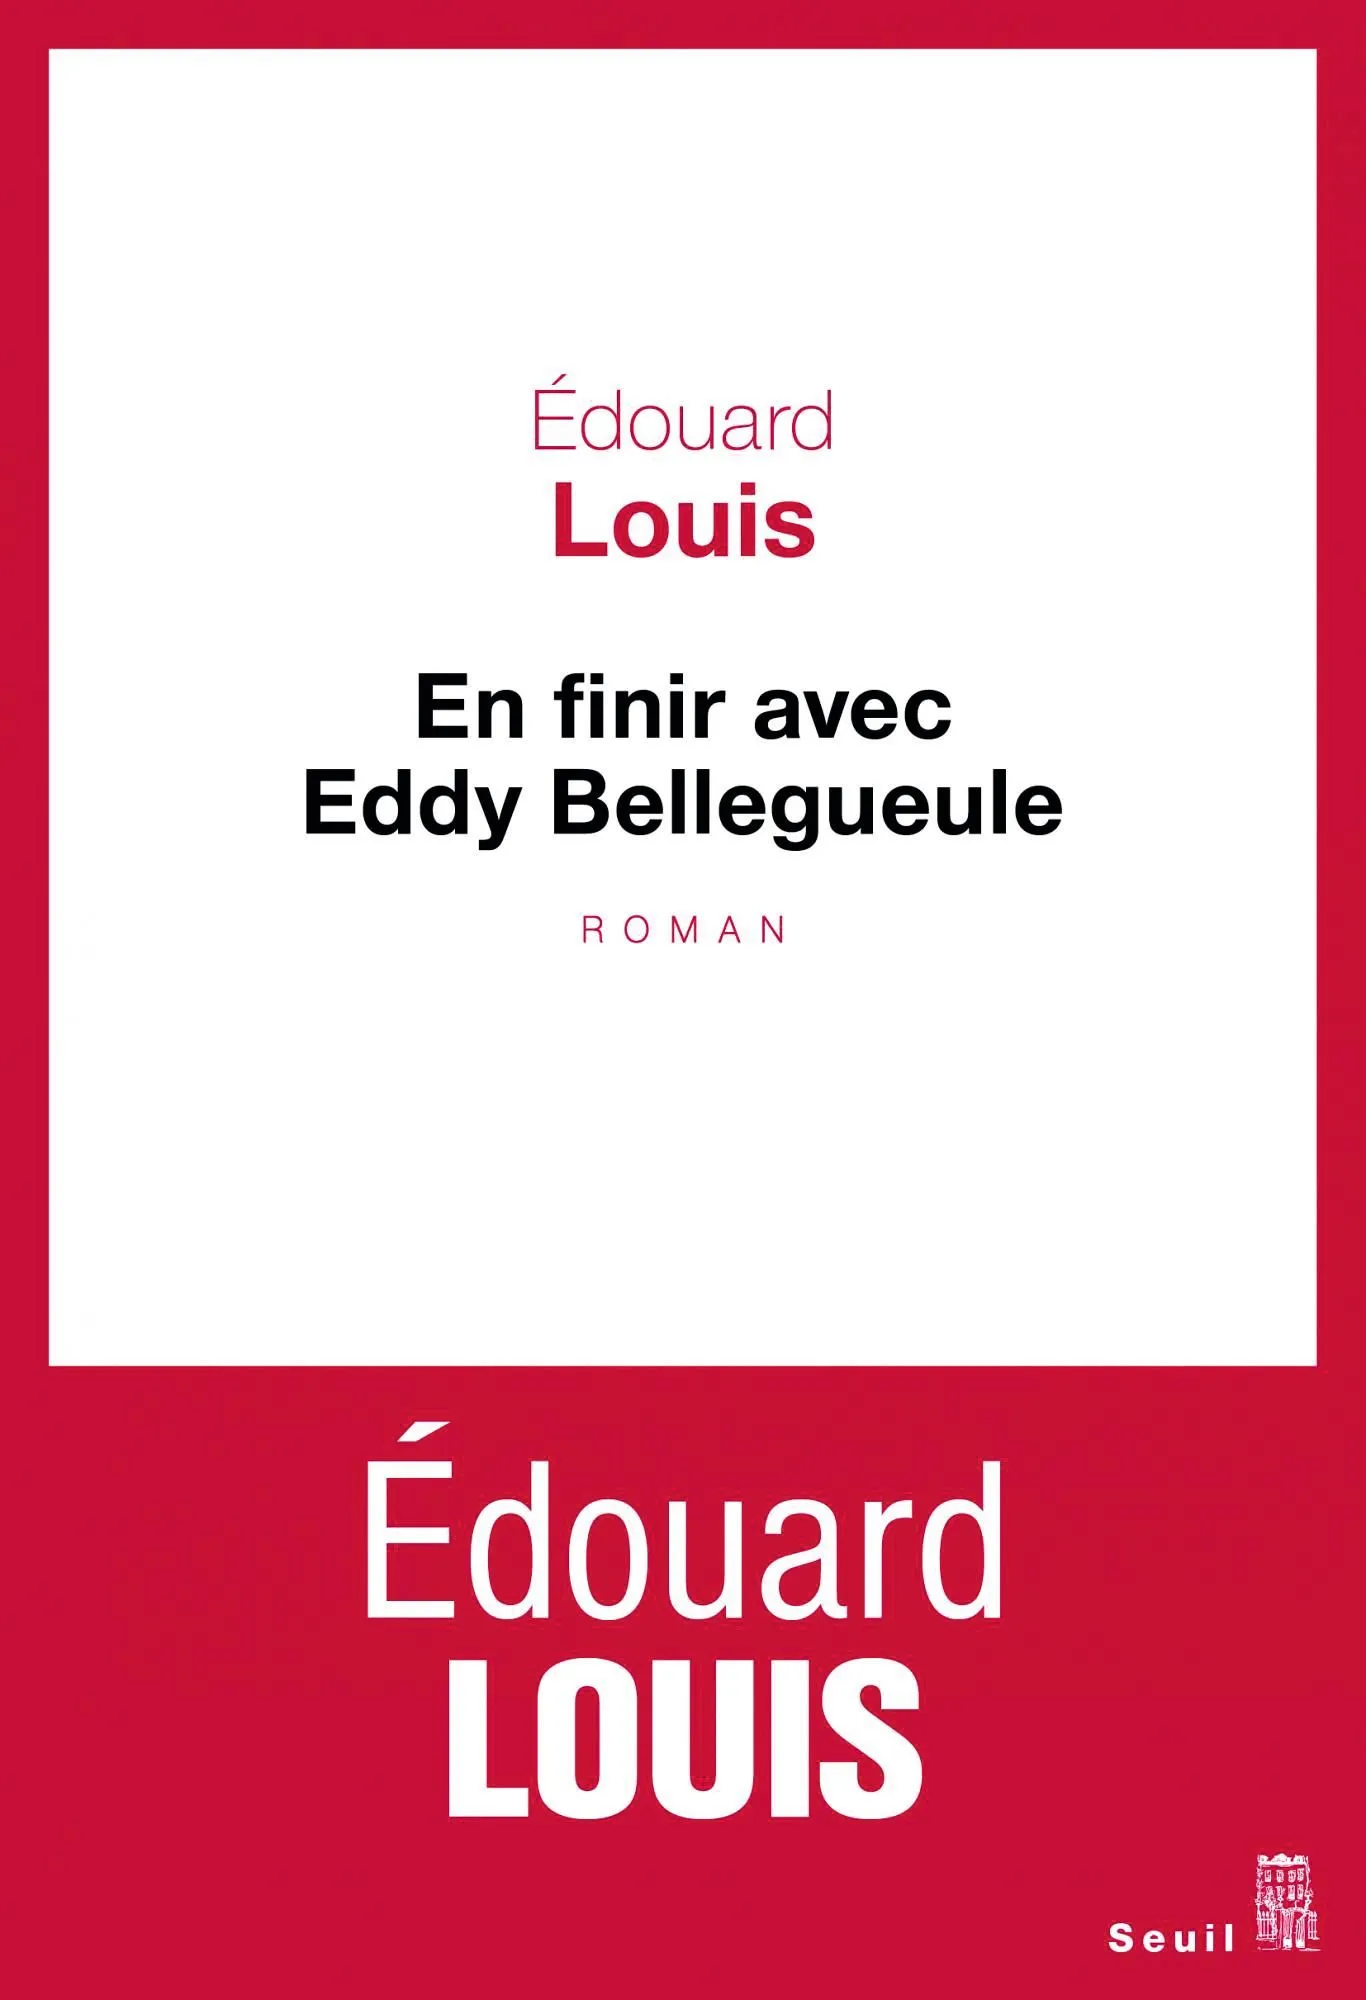 Eddy Bellegueule